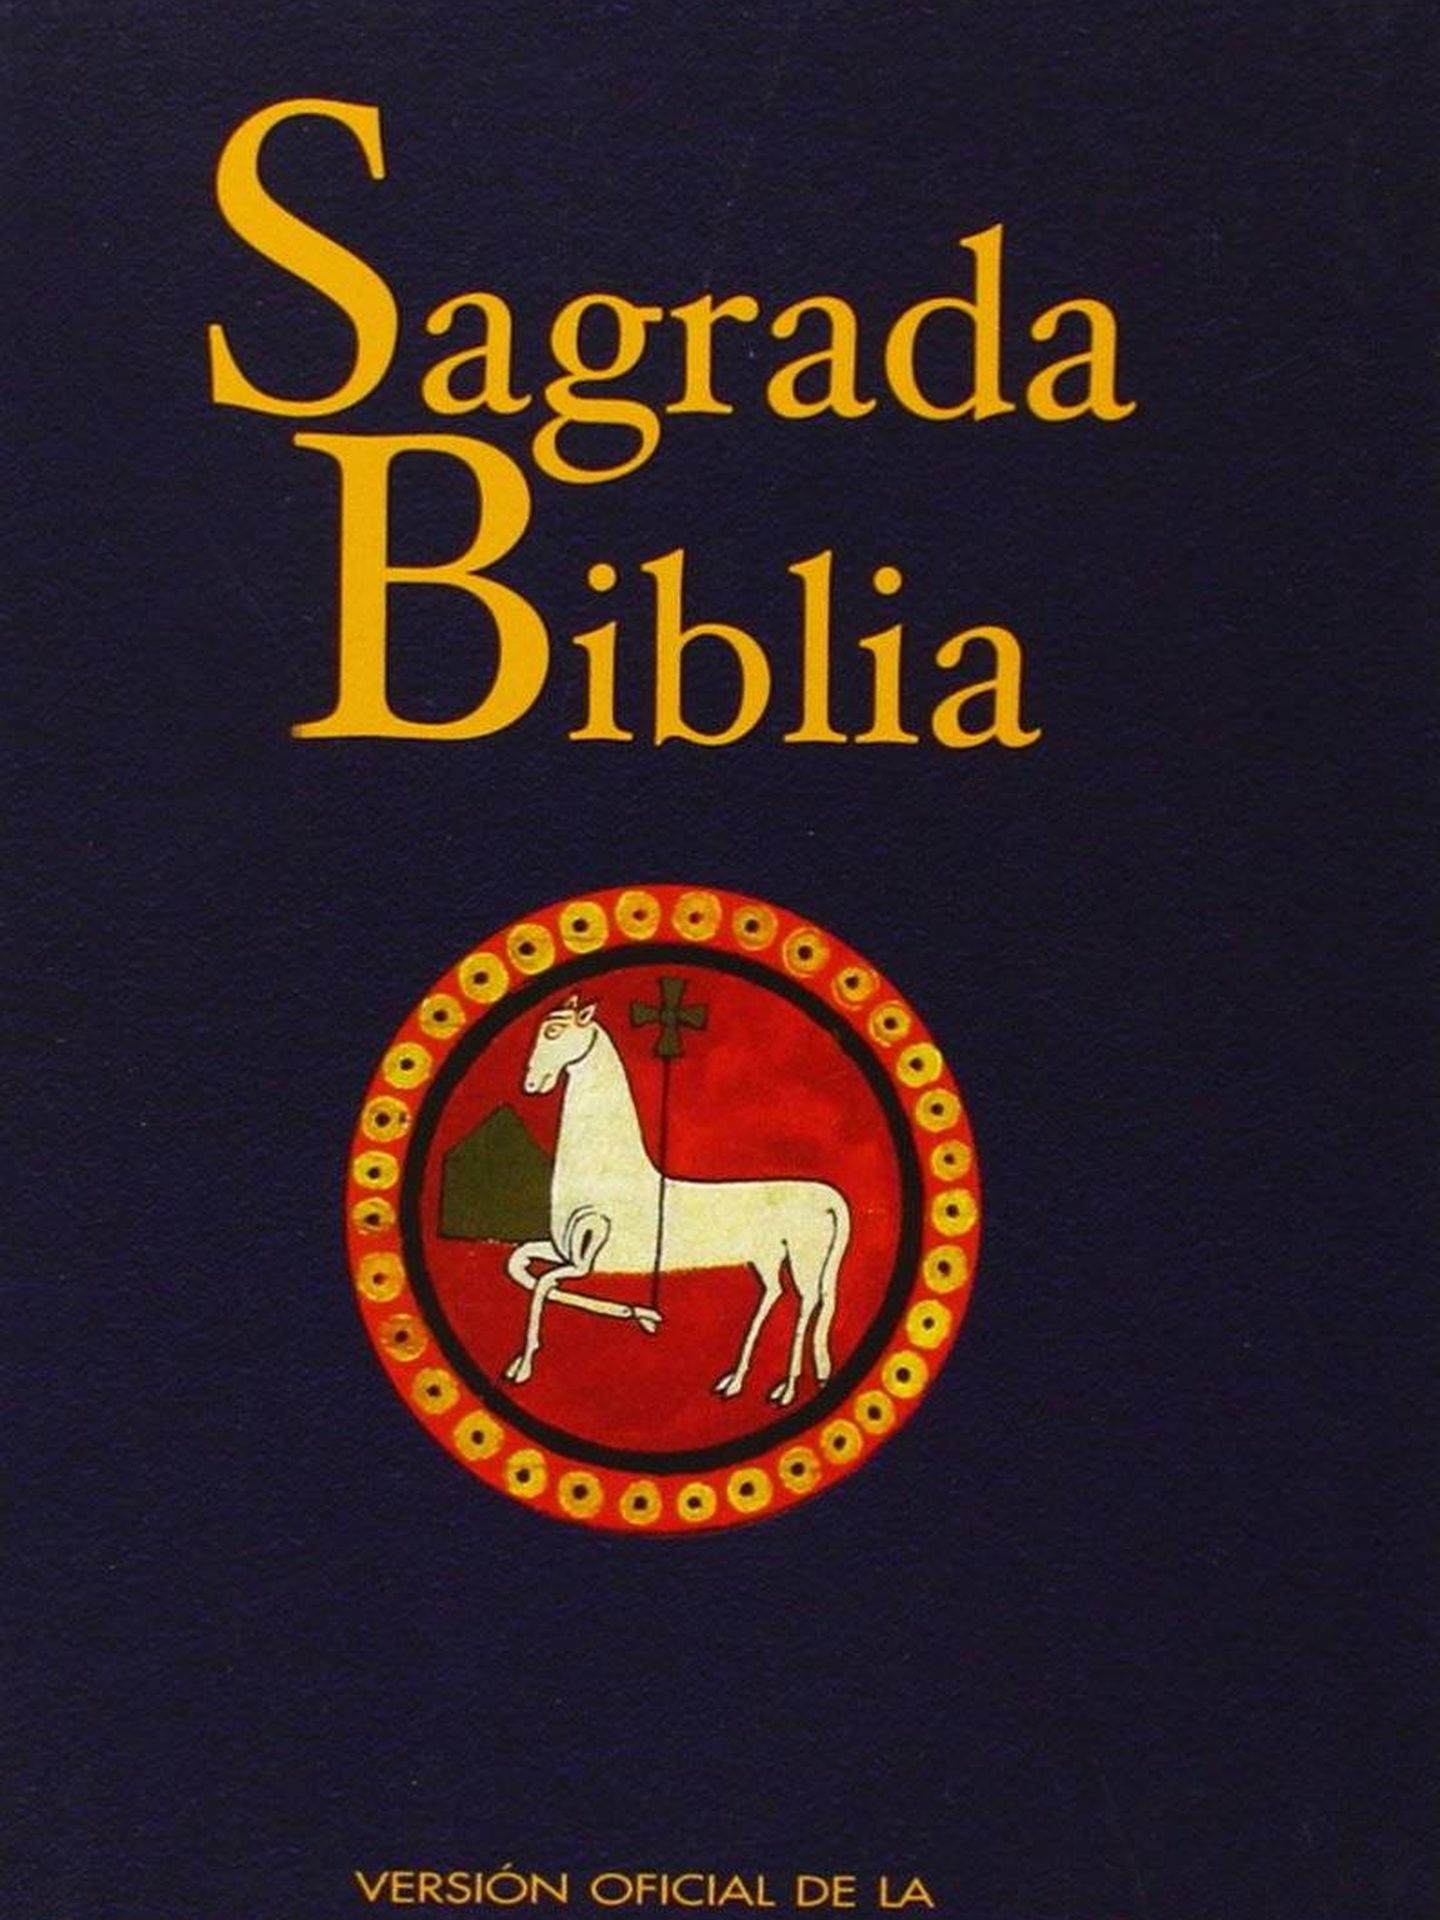 'Sagrada Biblia'.